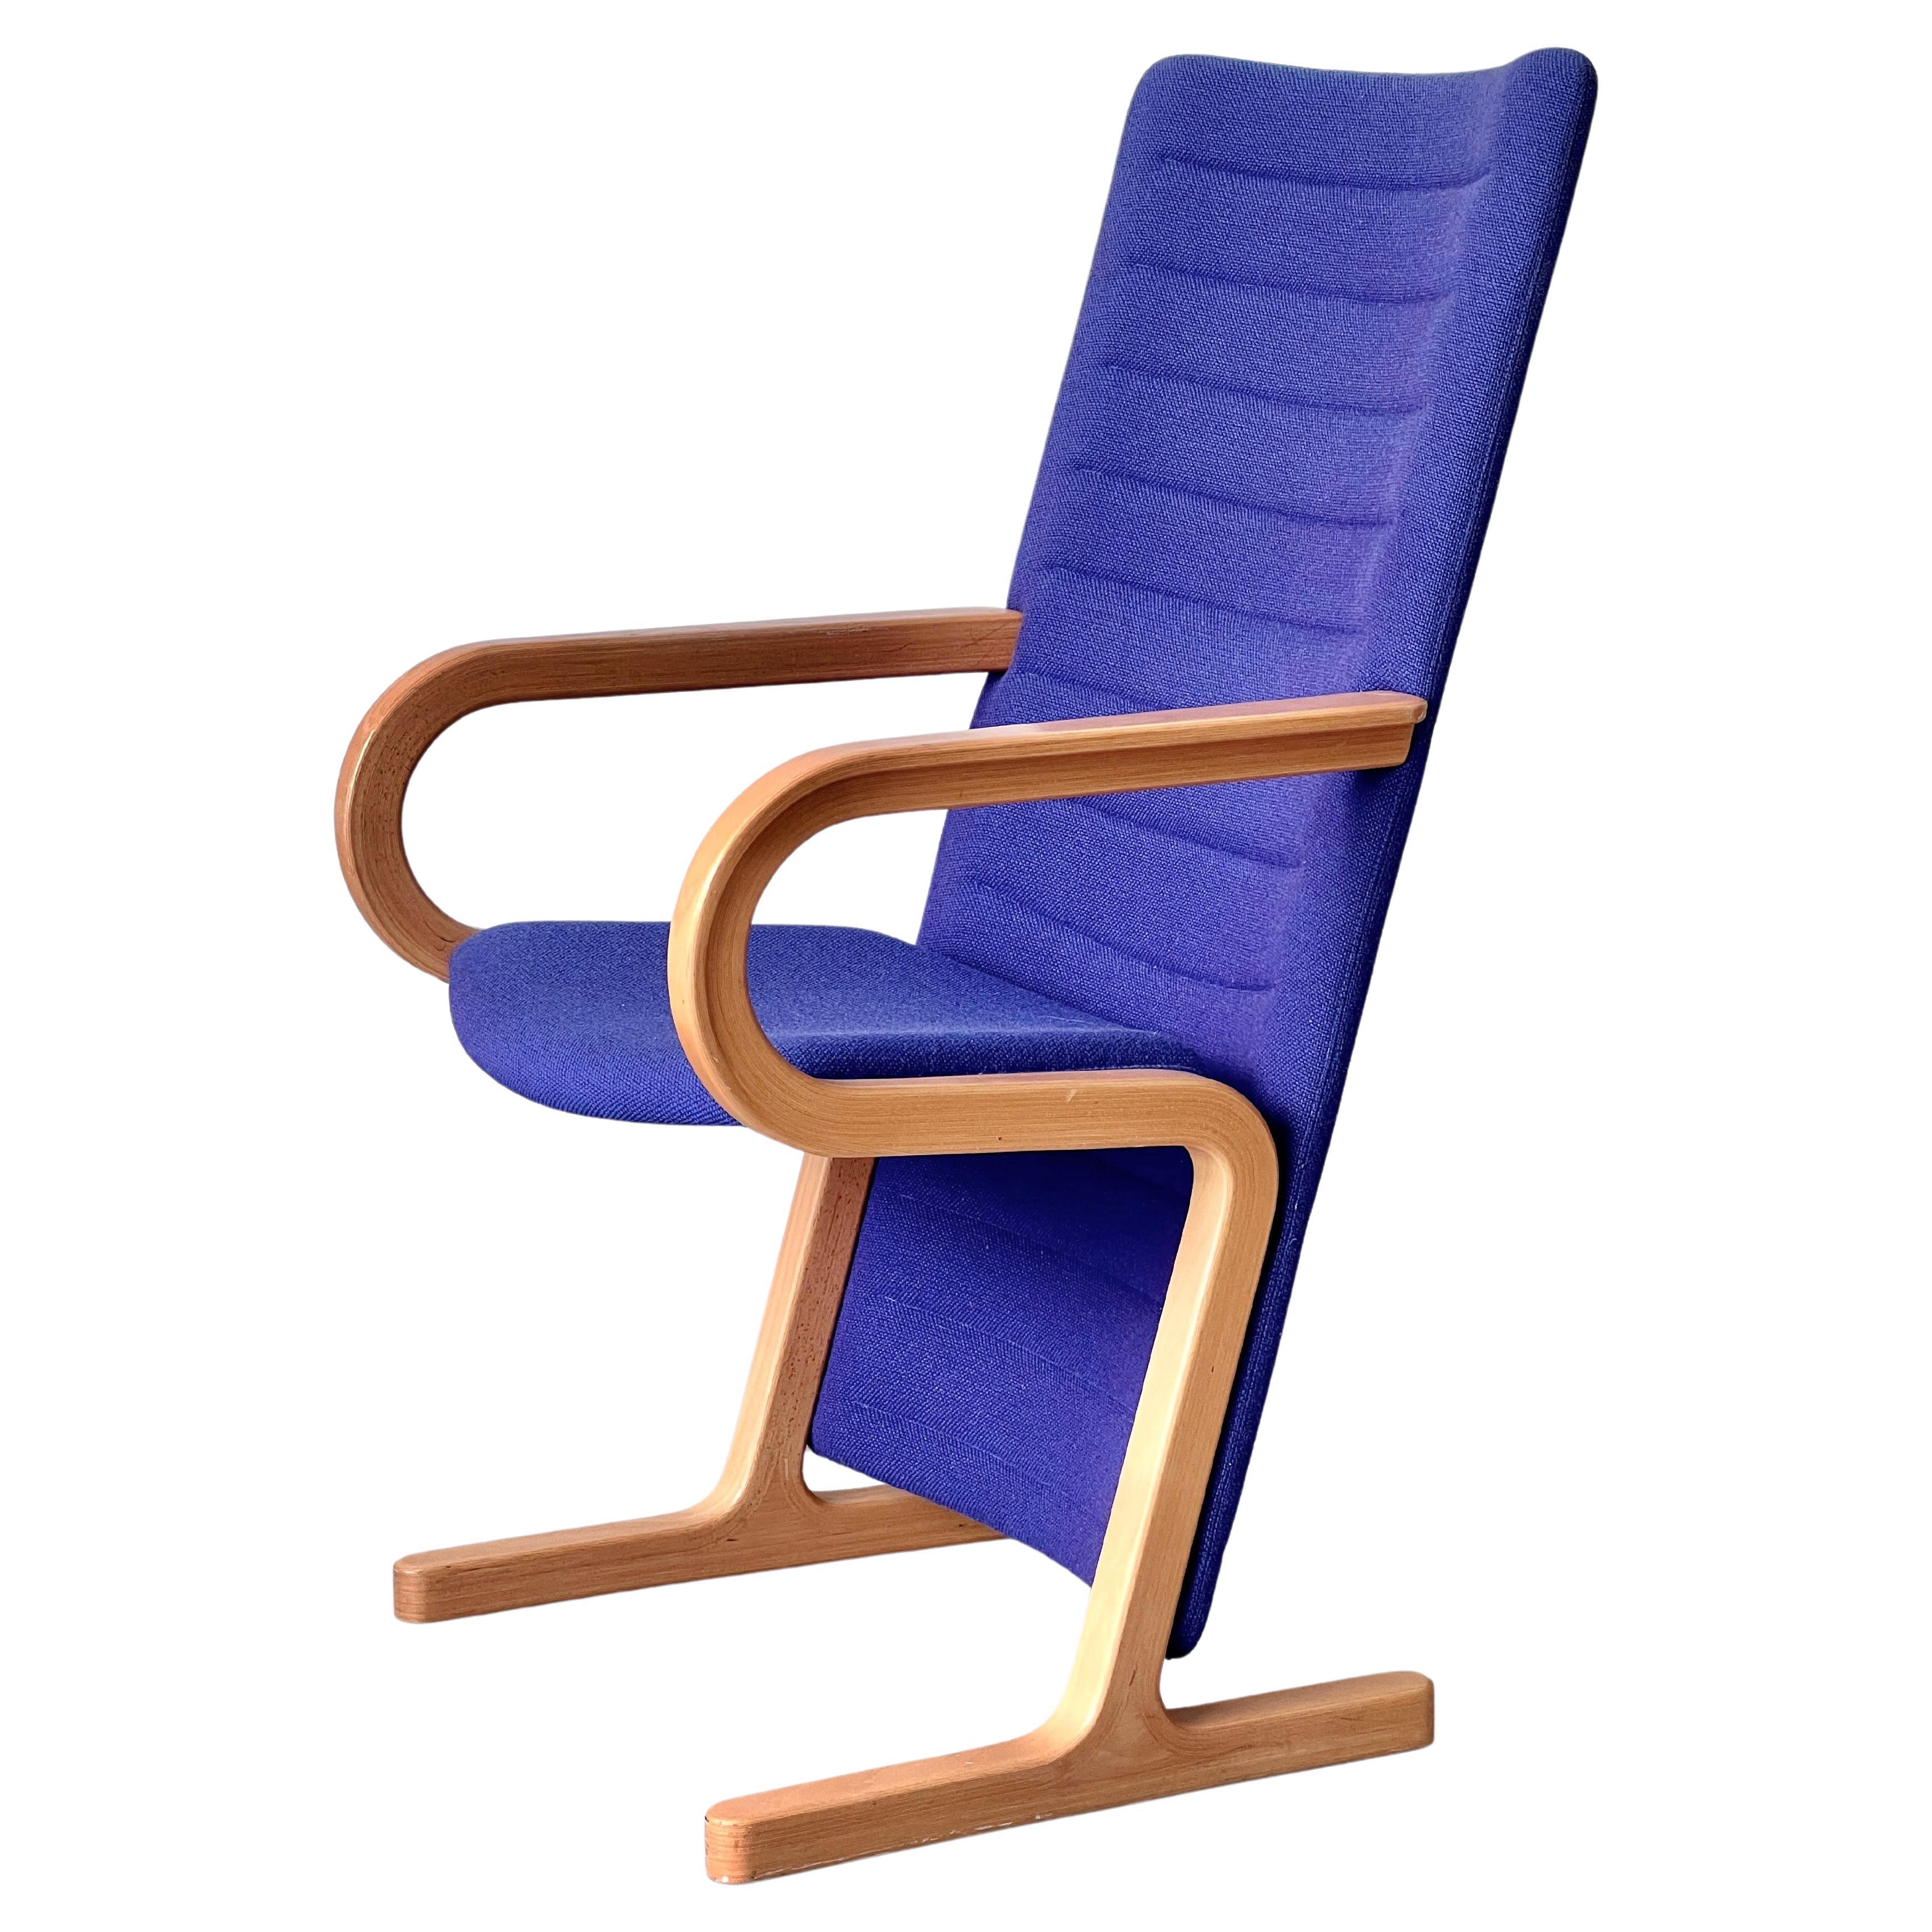 Magnus Olesen blue chair, probably by Rud Thygesen & Johnny Sørensen, Denmark